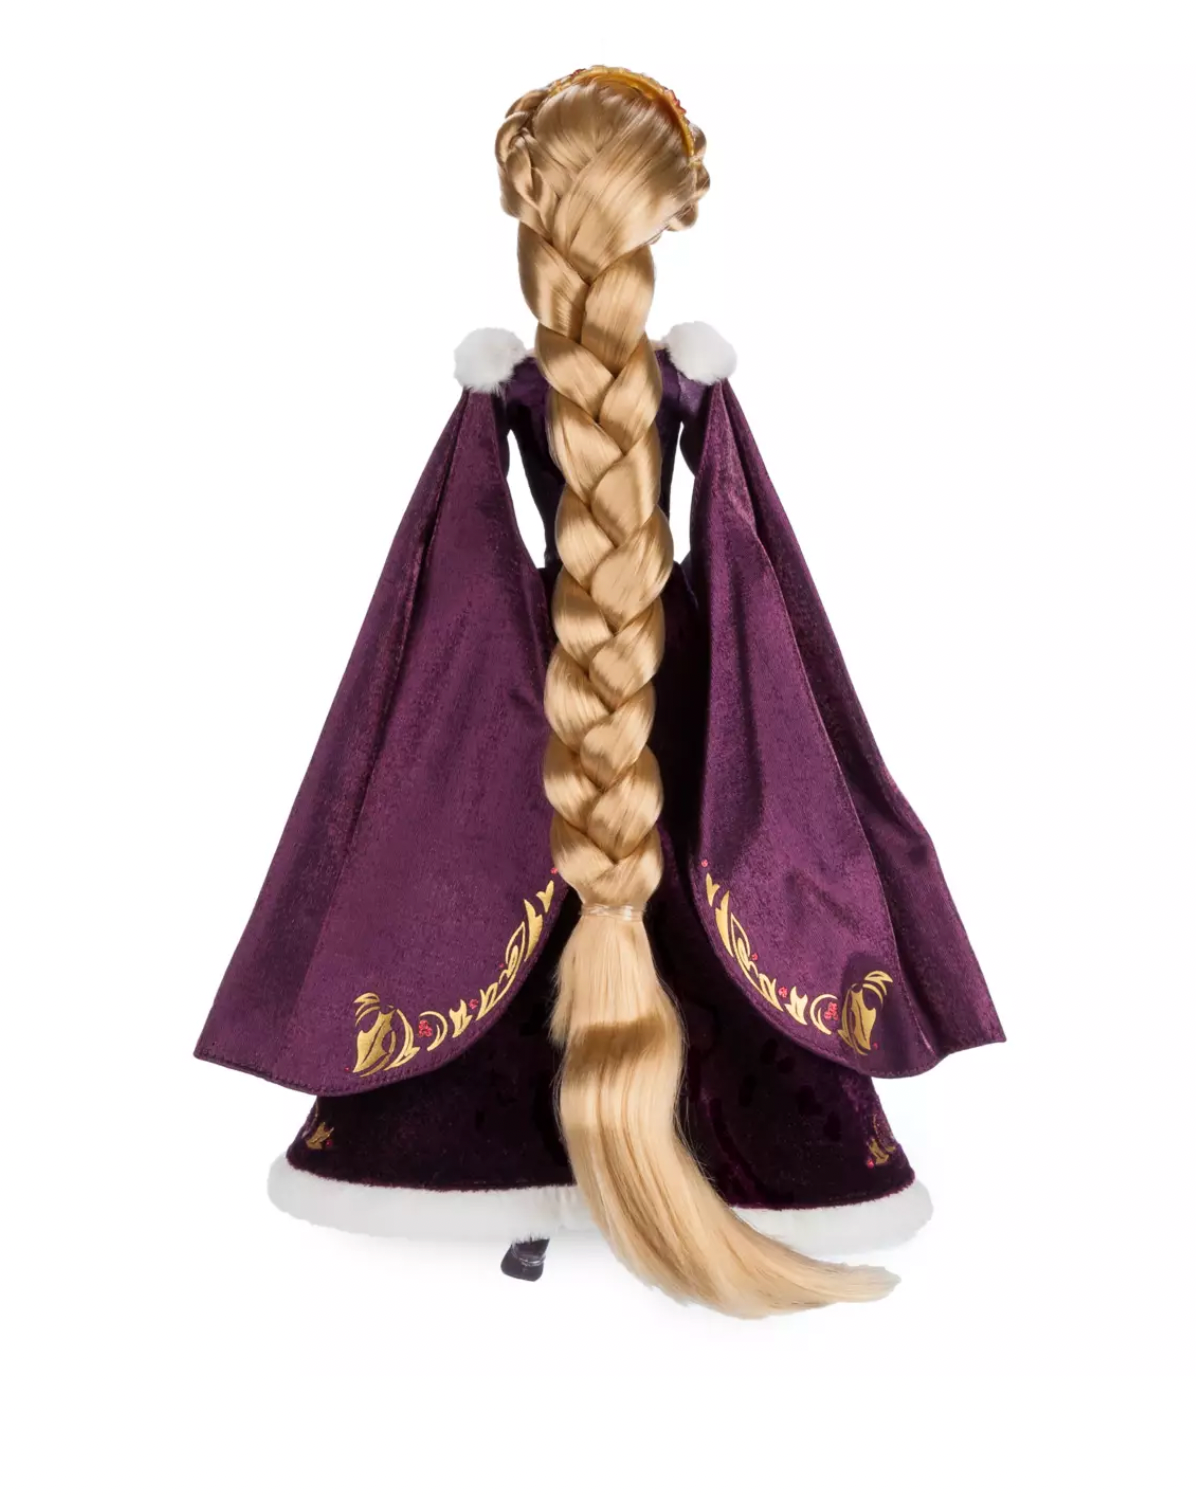 Disney 2021 Princess Rapunzel Holiday Special Edition Doll New No Box